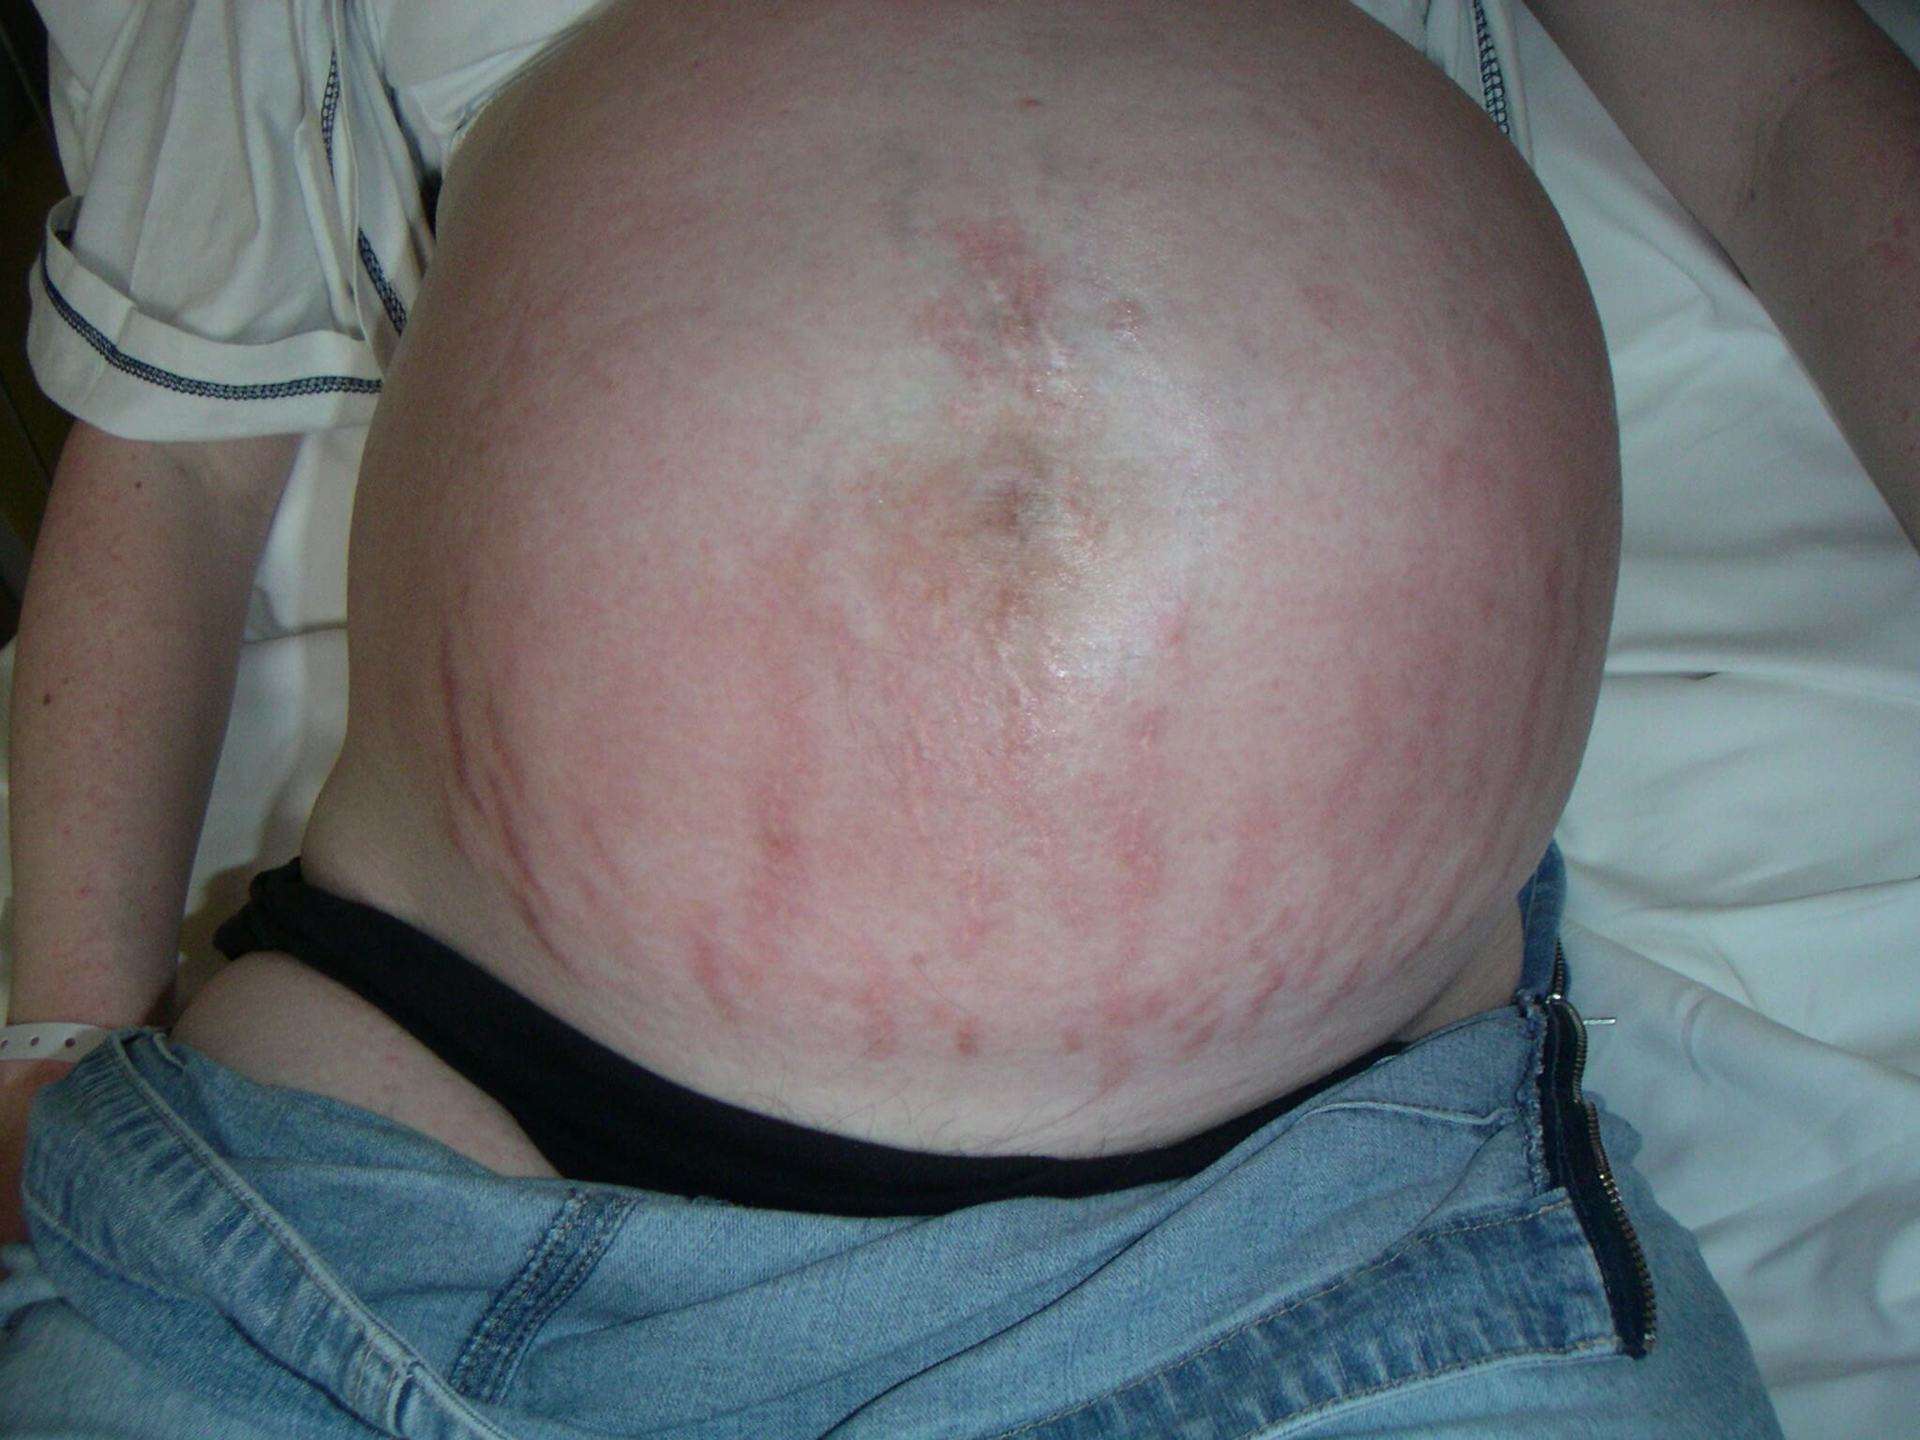 Pruritic urticarial papules and of pregnancy (PUPPP) - Huidarts.com